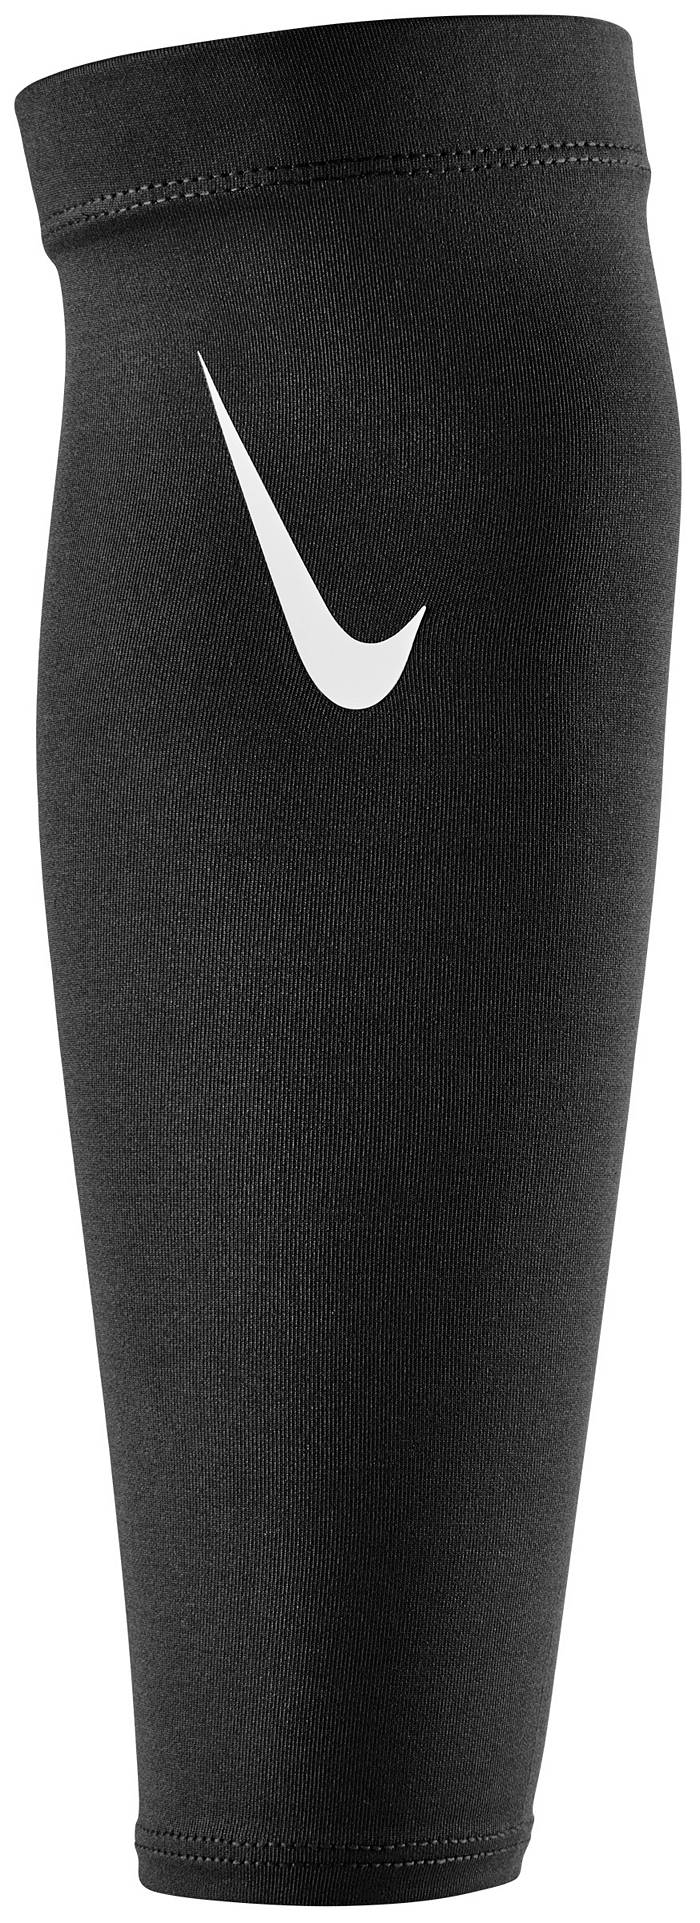 Nike Unisex Contact Support Elbow Sleeve Black/White Size OSFM (1